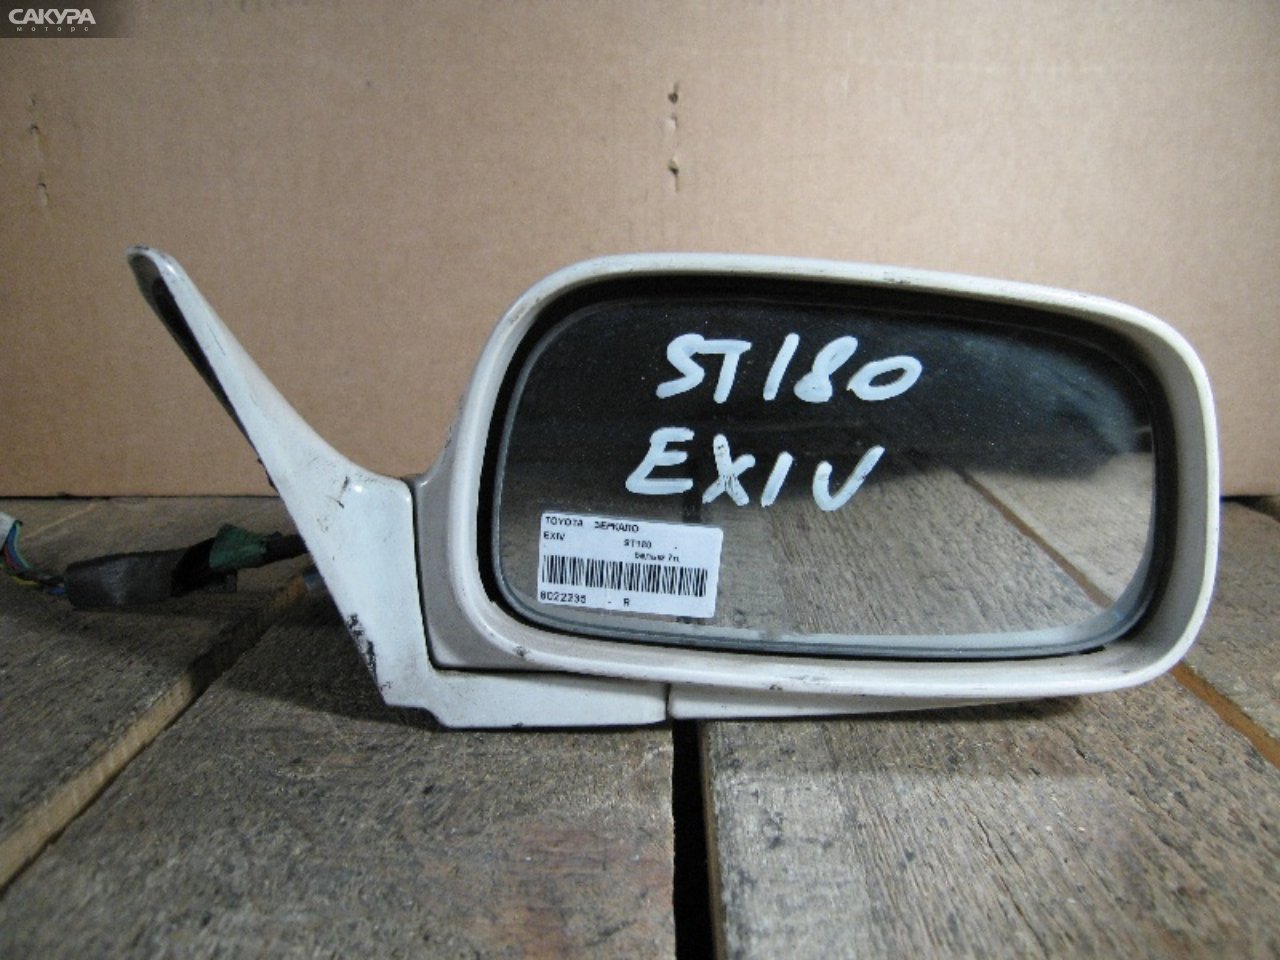 Зеркало боковое правое Toyota Corona Exiv ST180: купить в Сакура Абакан.